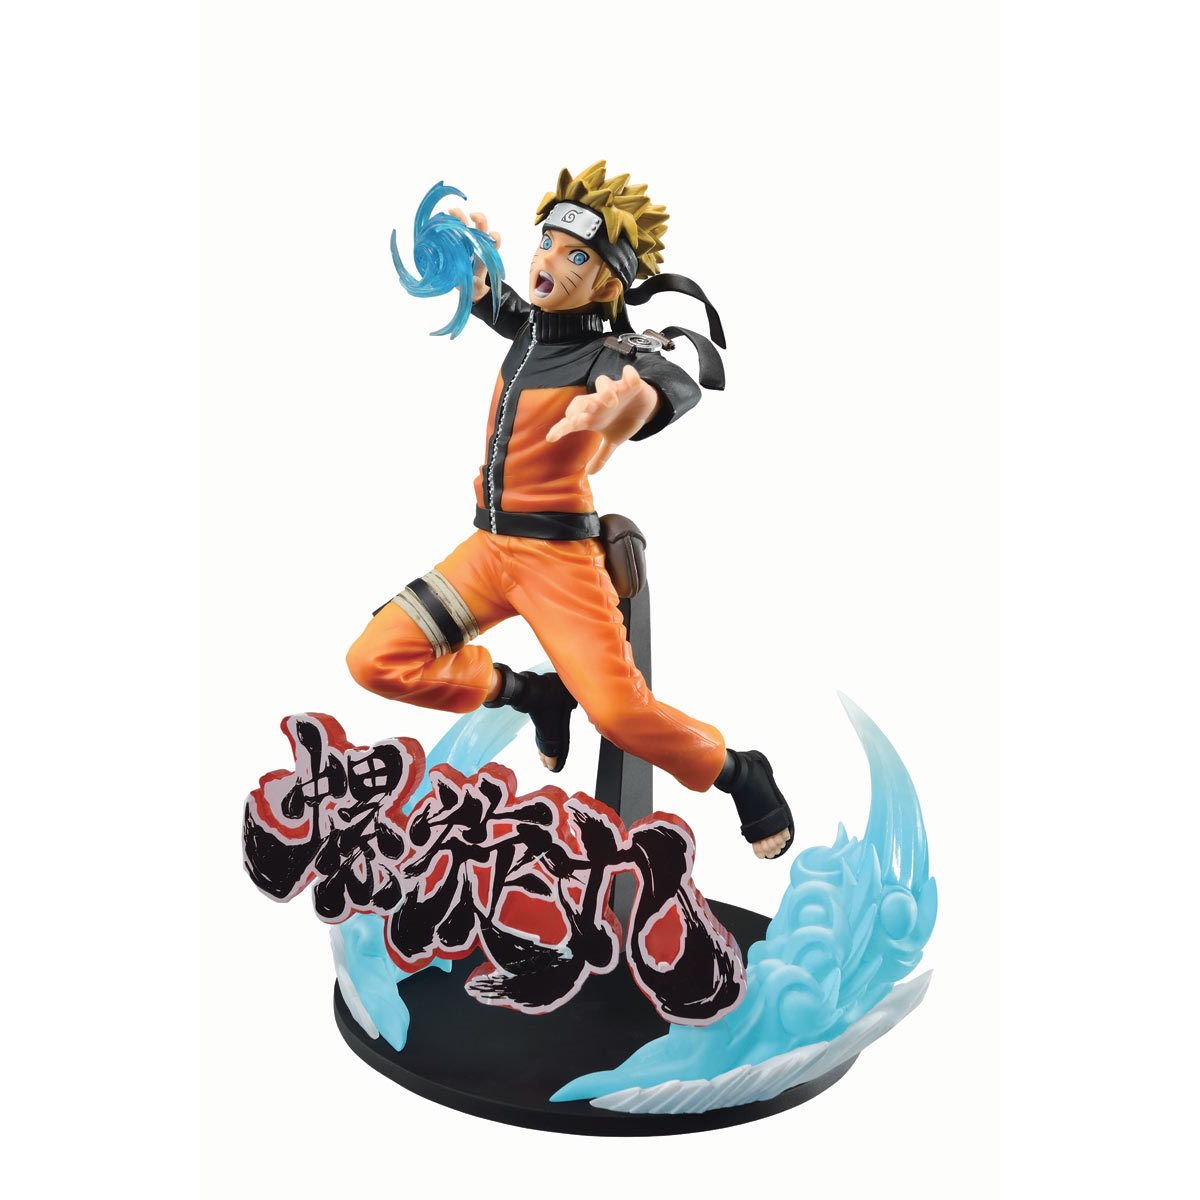 Funko Pop! Anime: Naruto - Naruto (Rasengan) #181 Vinyl Figure — Beyond  Collectibles